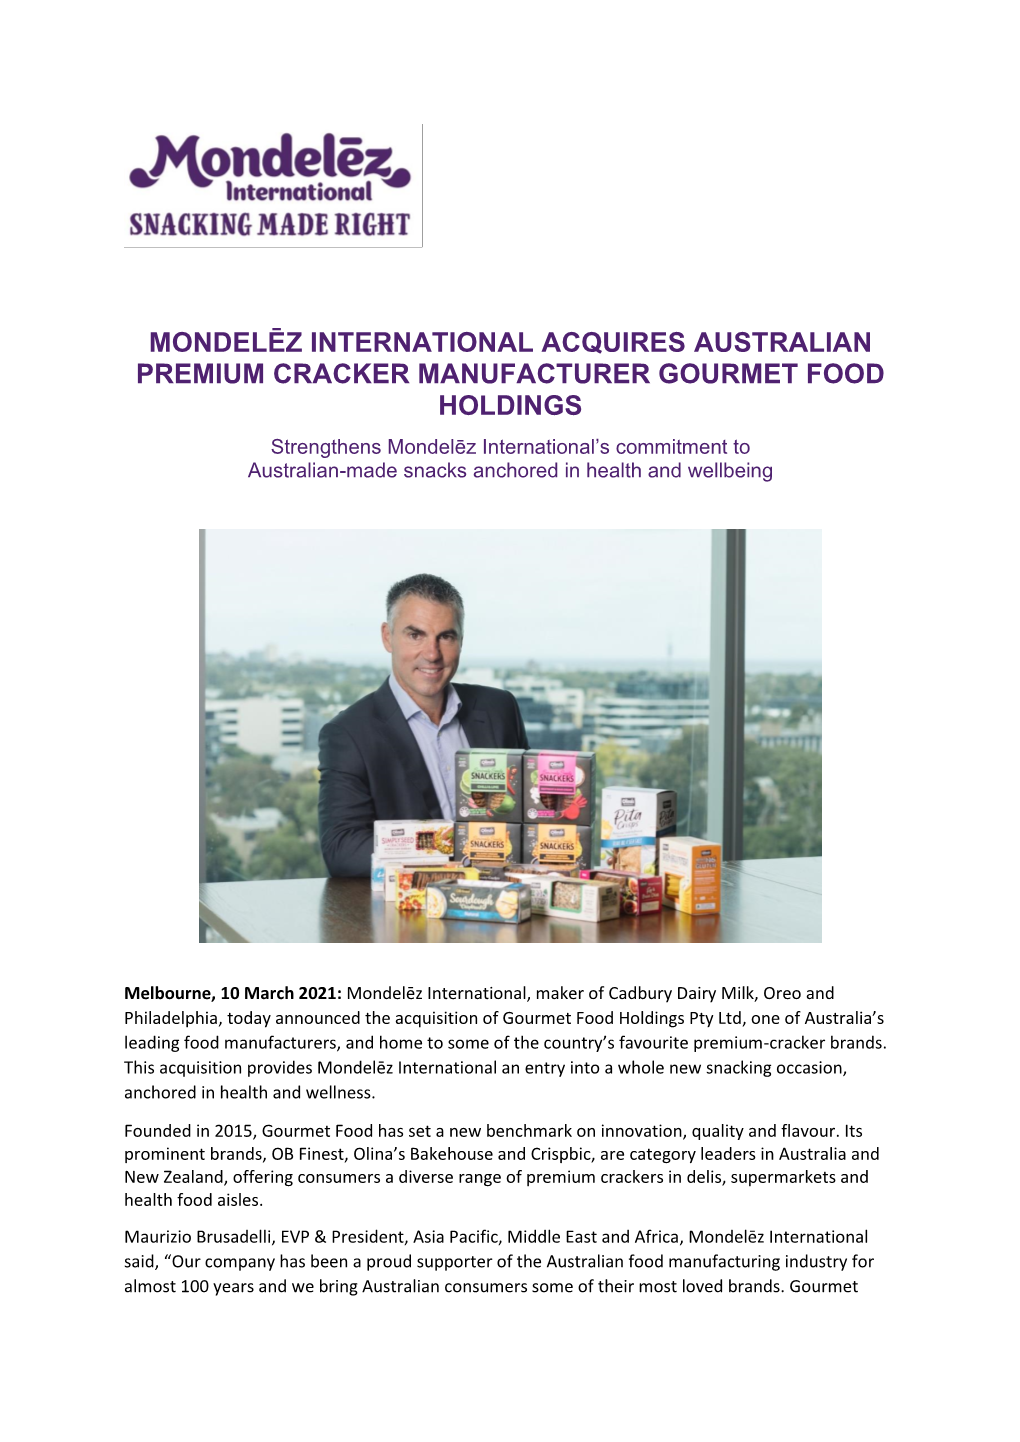 Mondelēz International Acquires Australian Premium Cracker Manufacturer Gourmet Food Holdings